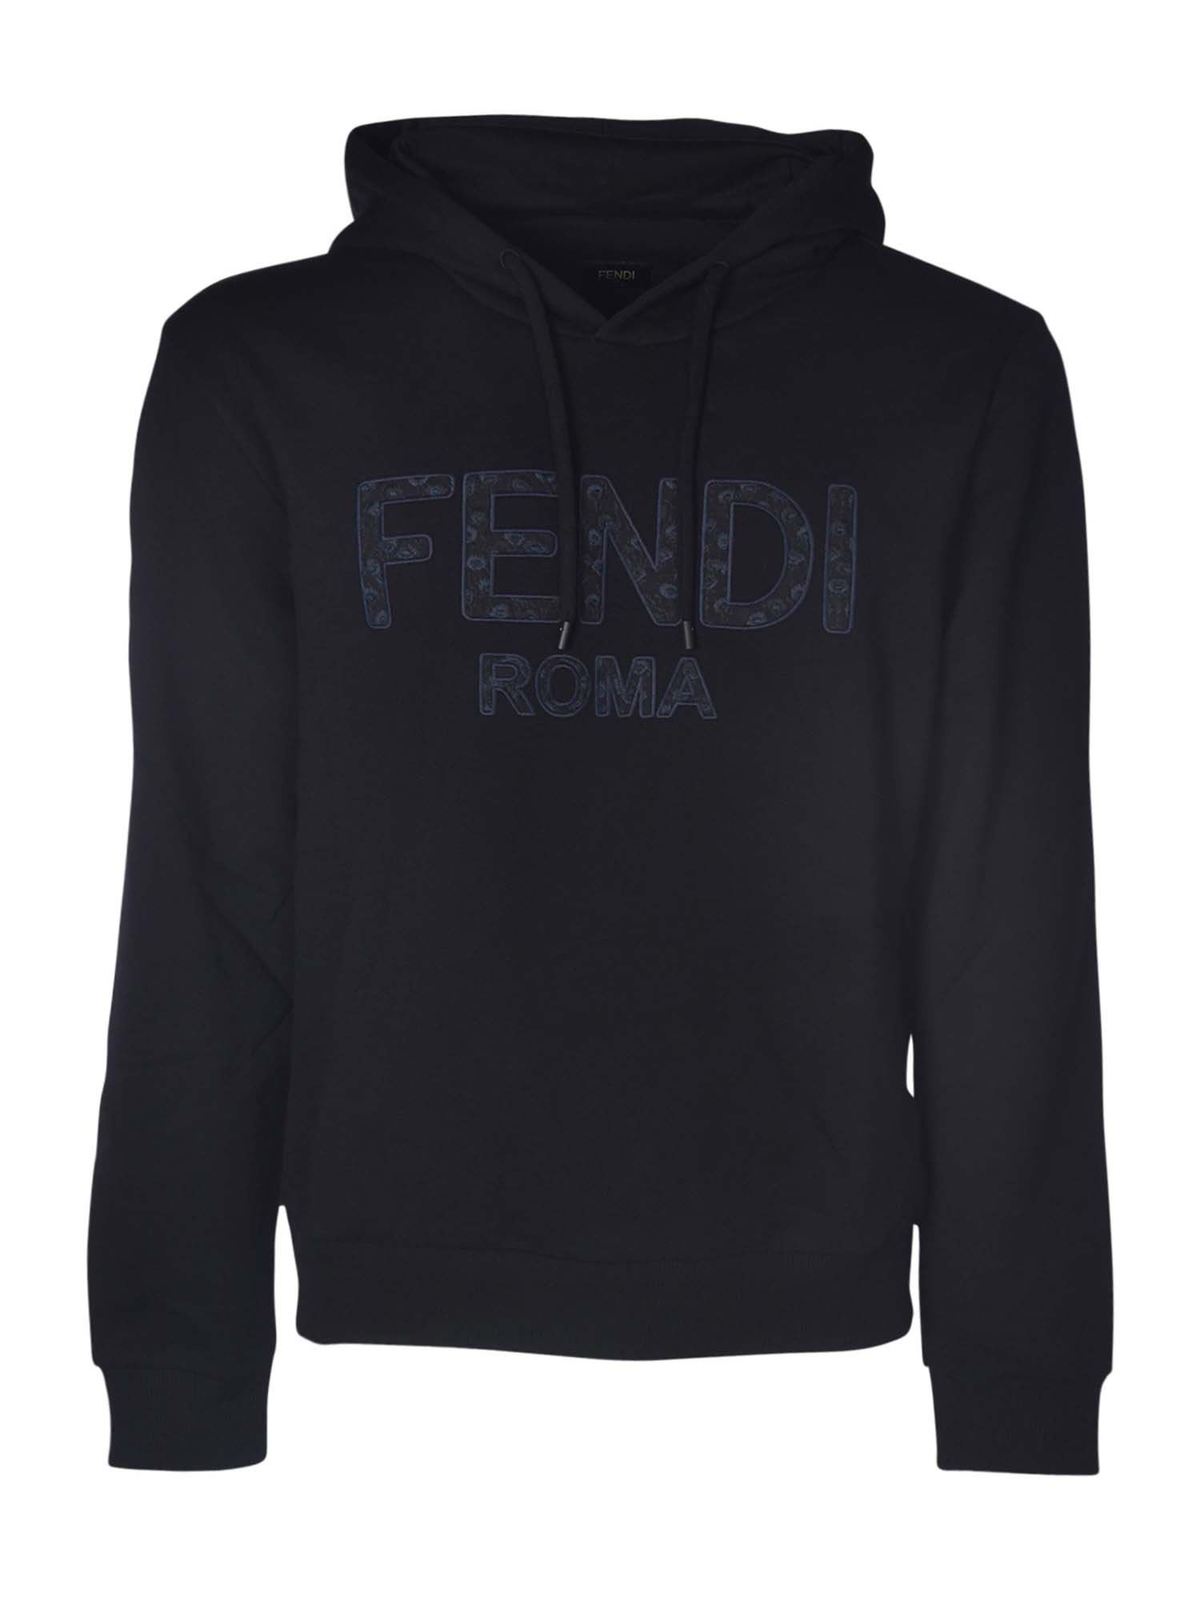 Fendi - Black hoodie with front logo 